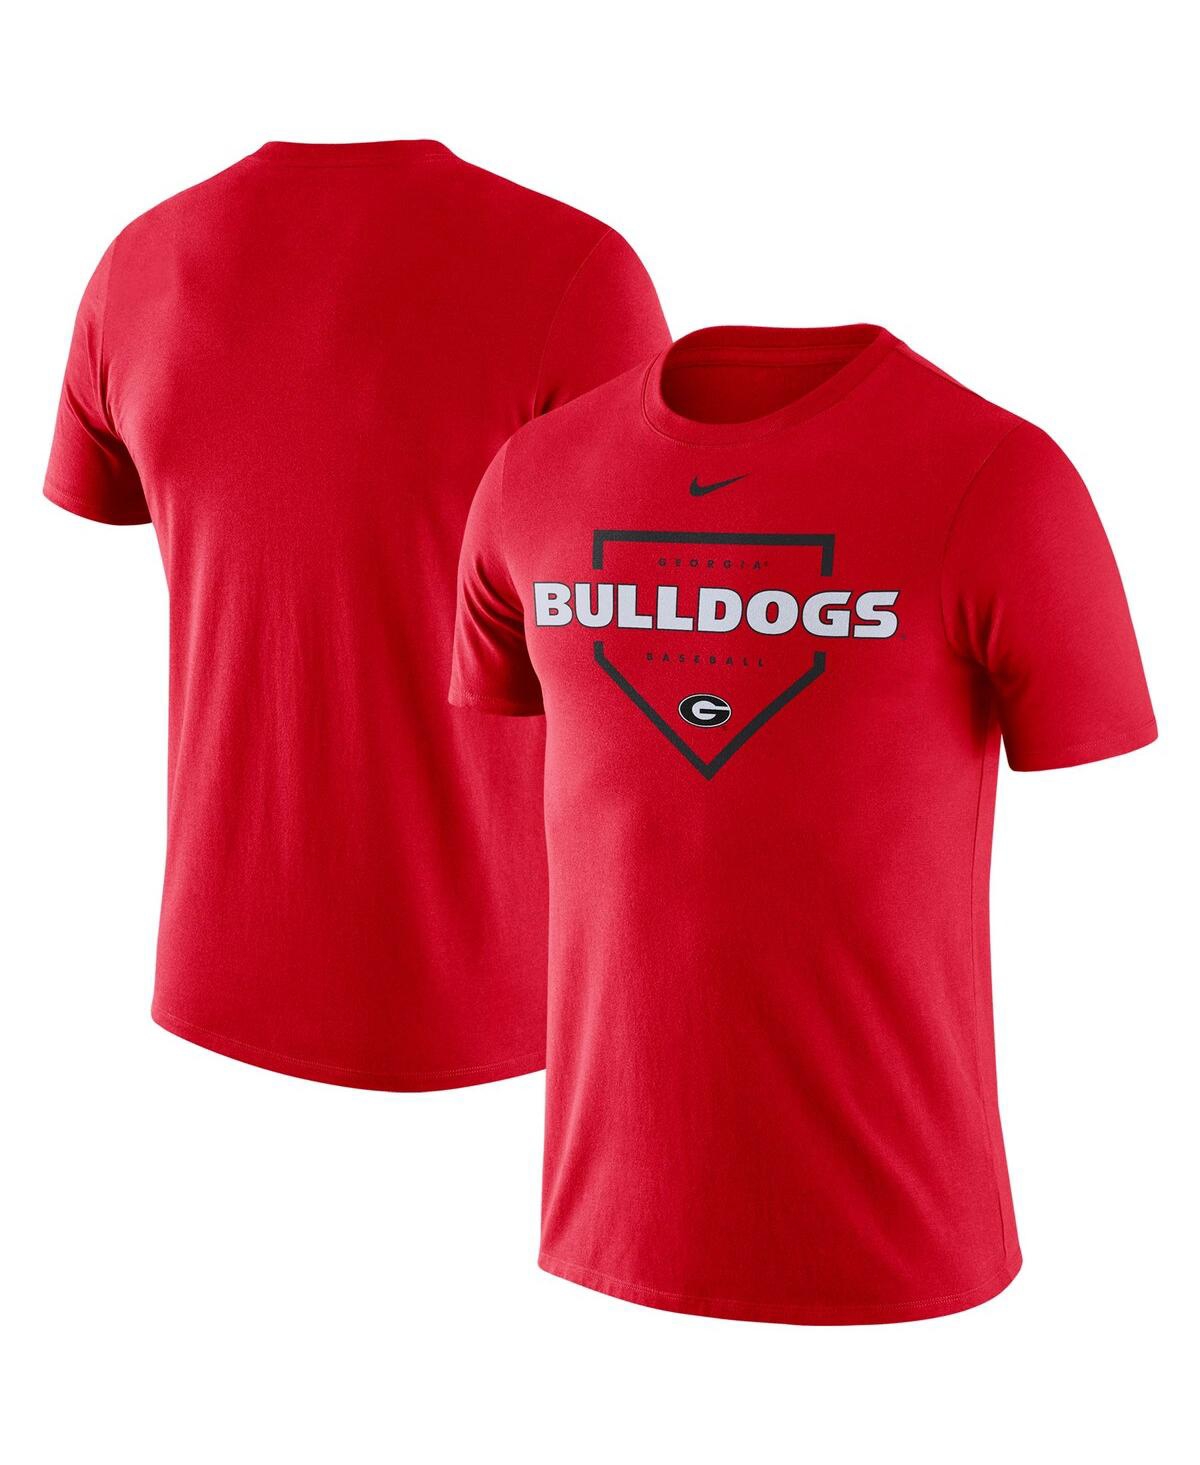 Men's Nike Red Georgia Bulldogs Baseball Plate Performance T-shirt